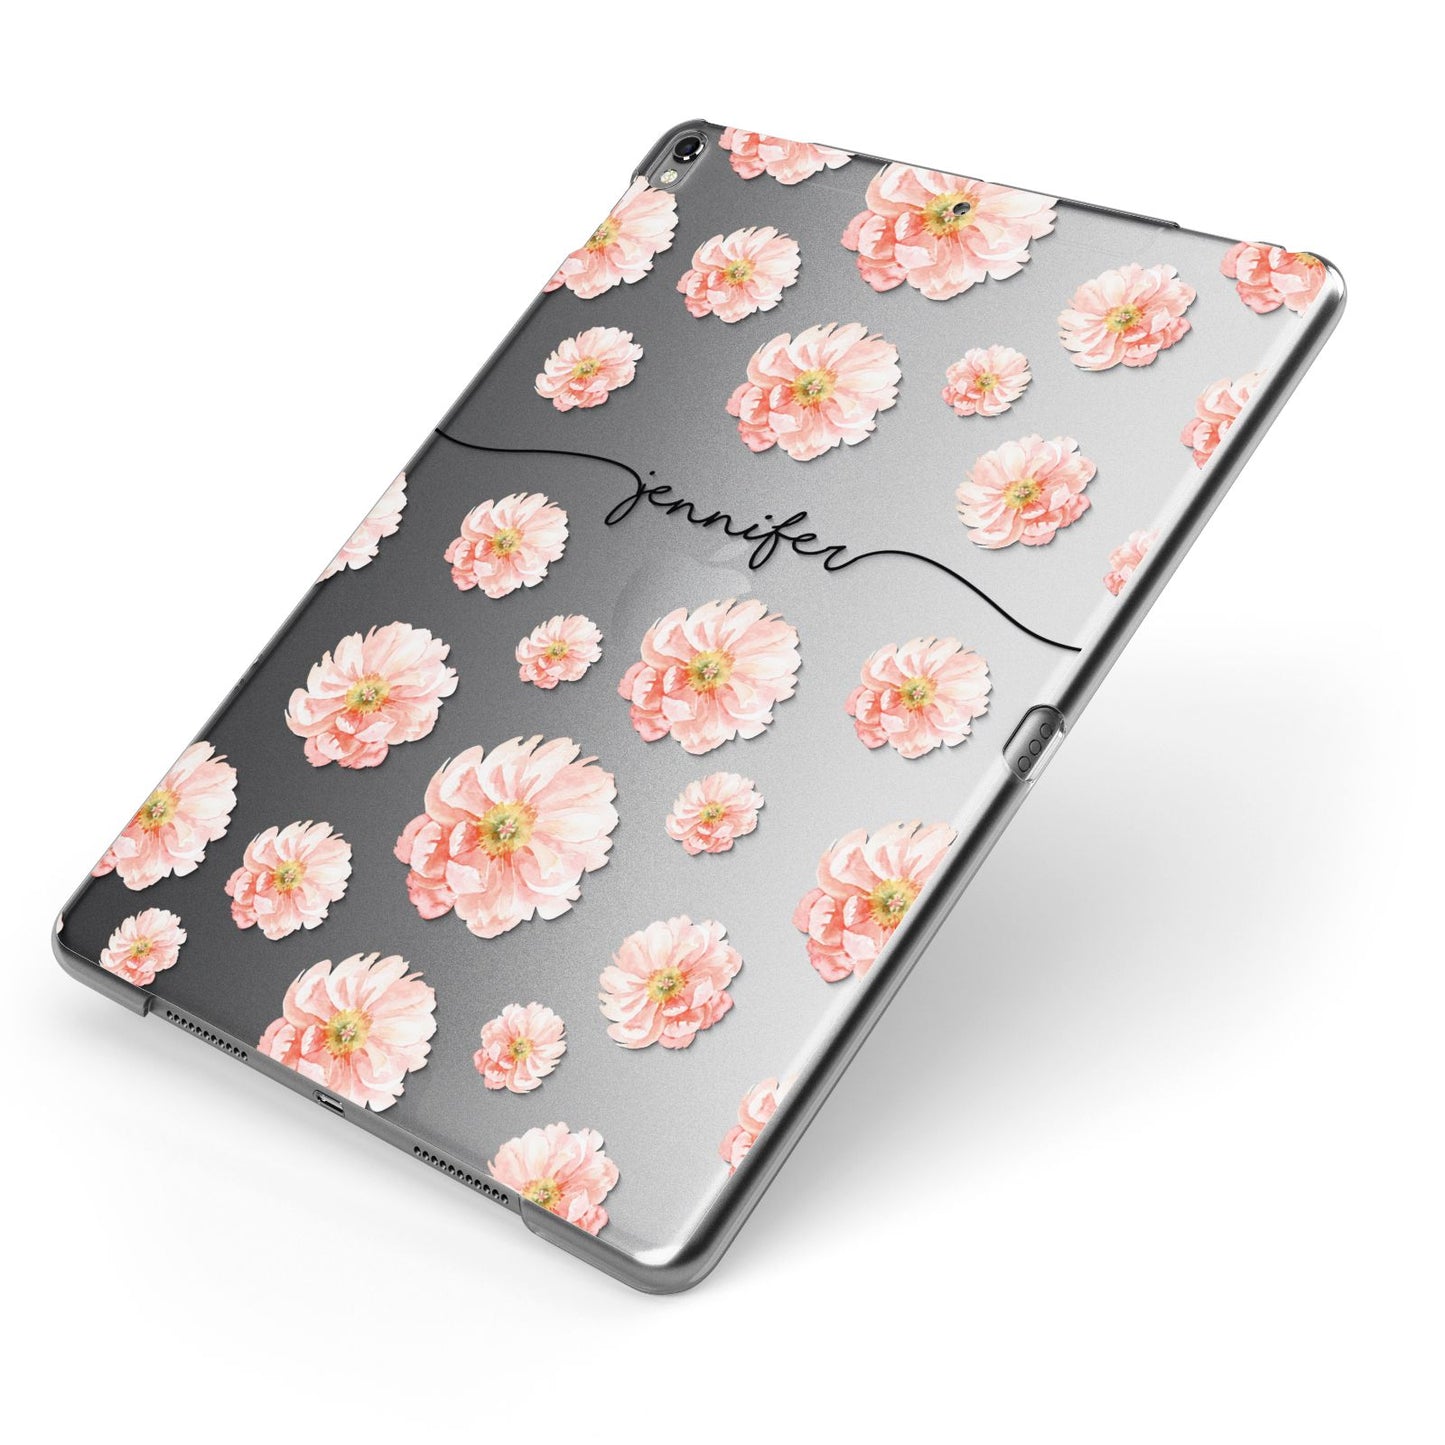 Personalised Flower Name Apple iPad Case on Grey iPad Side View